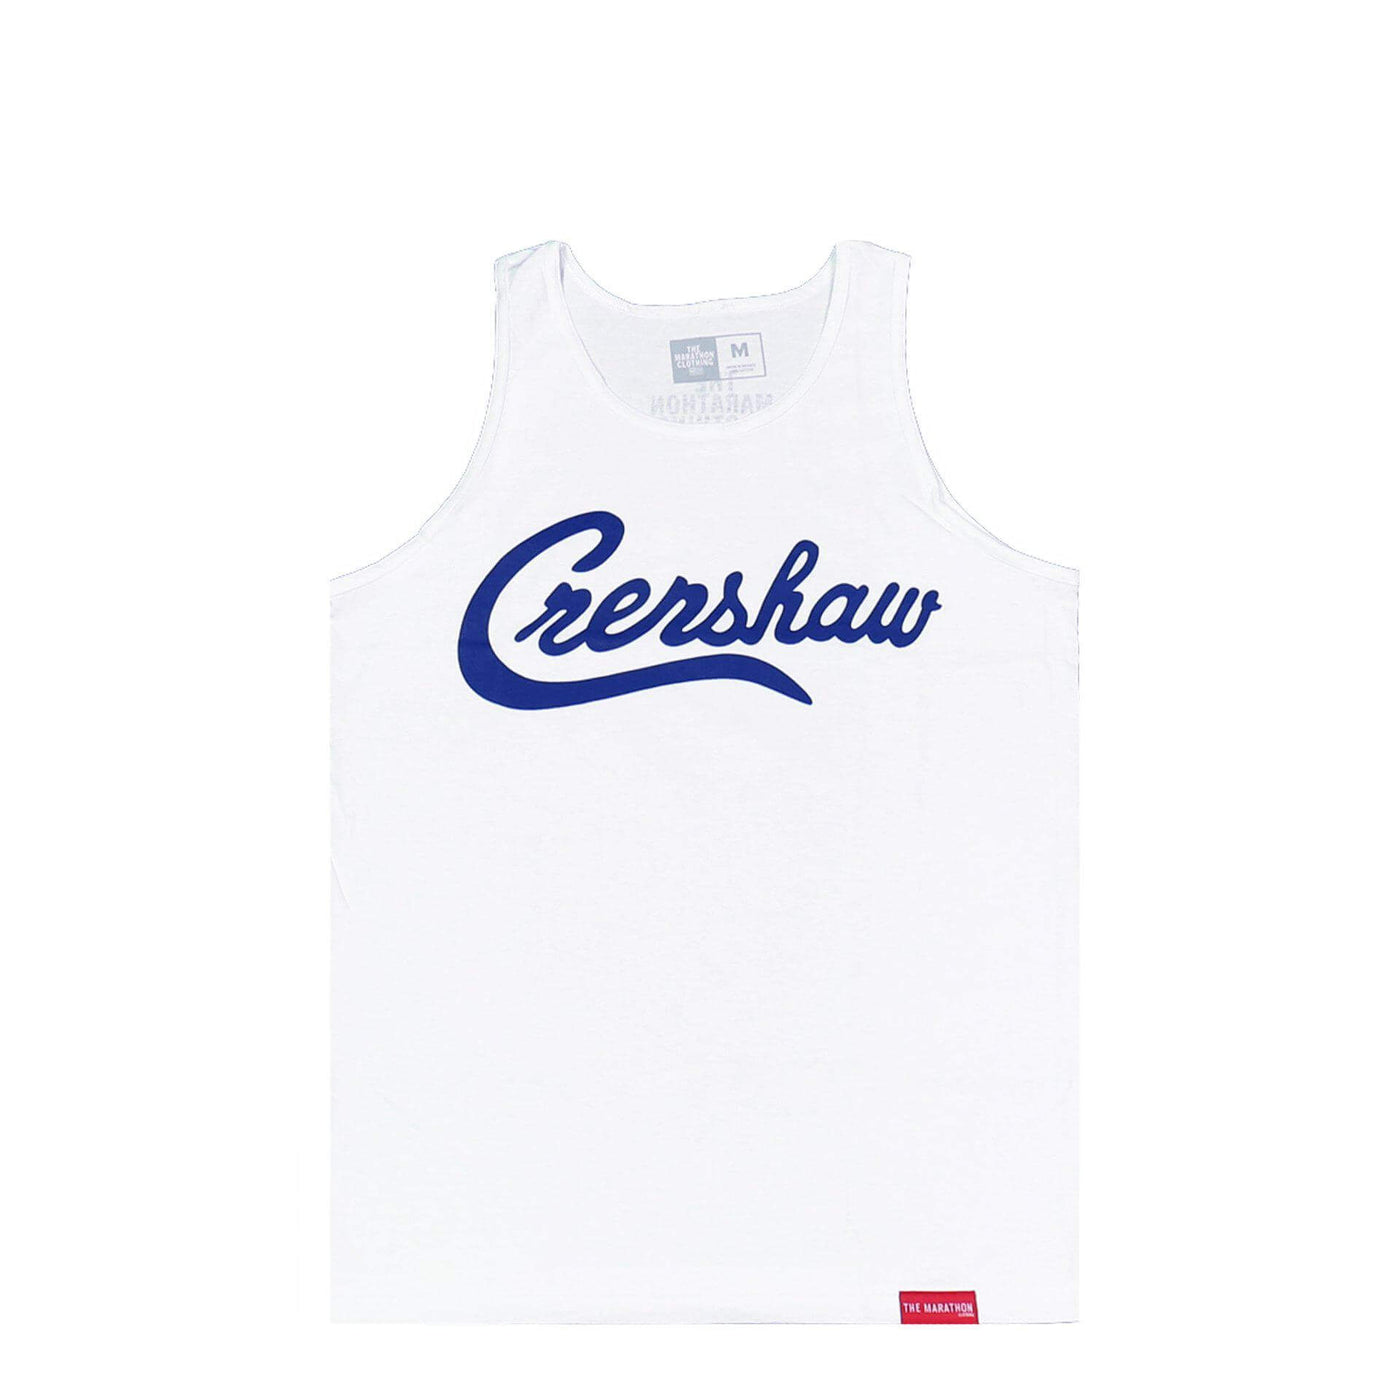 Crenshaw Tank Top - White/Royal-The Marathon Clothing